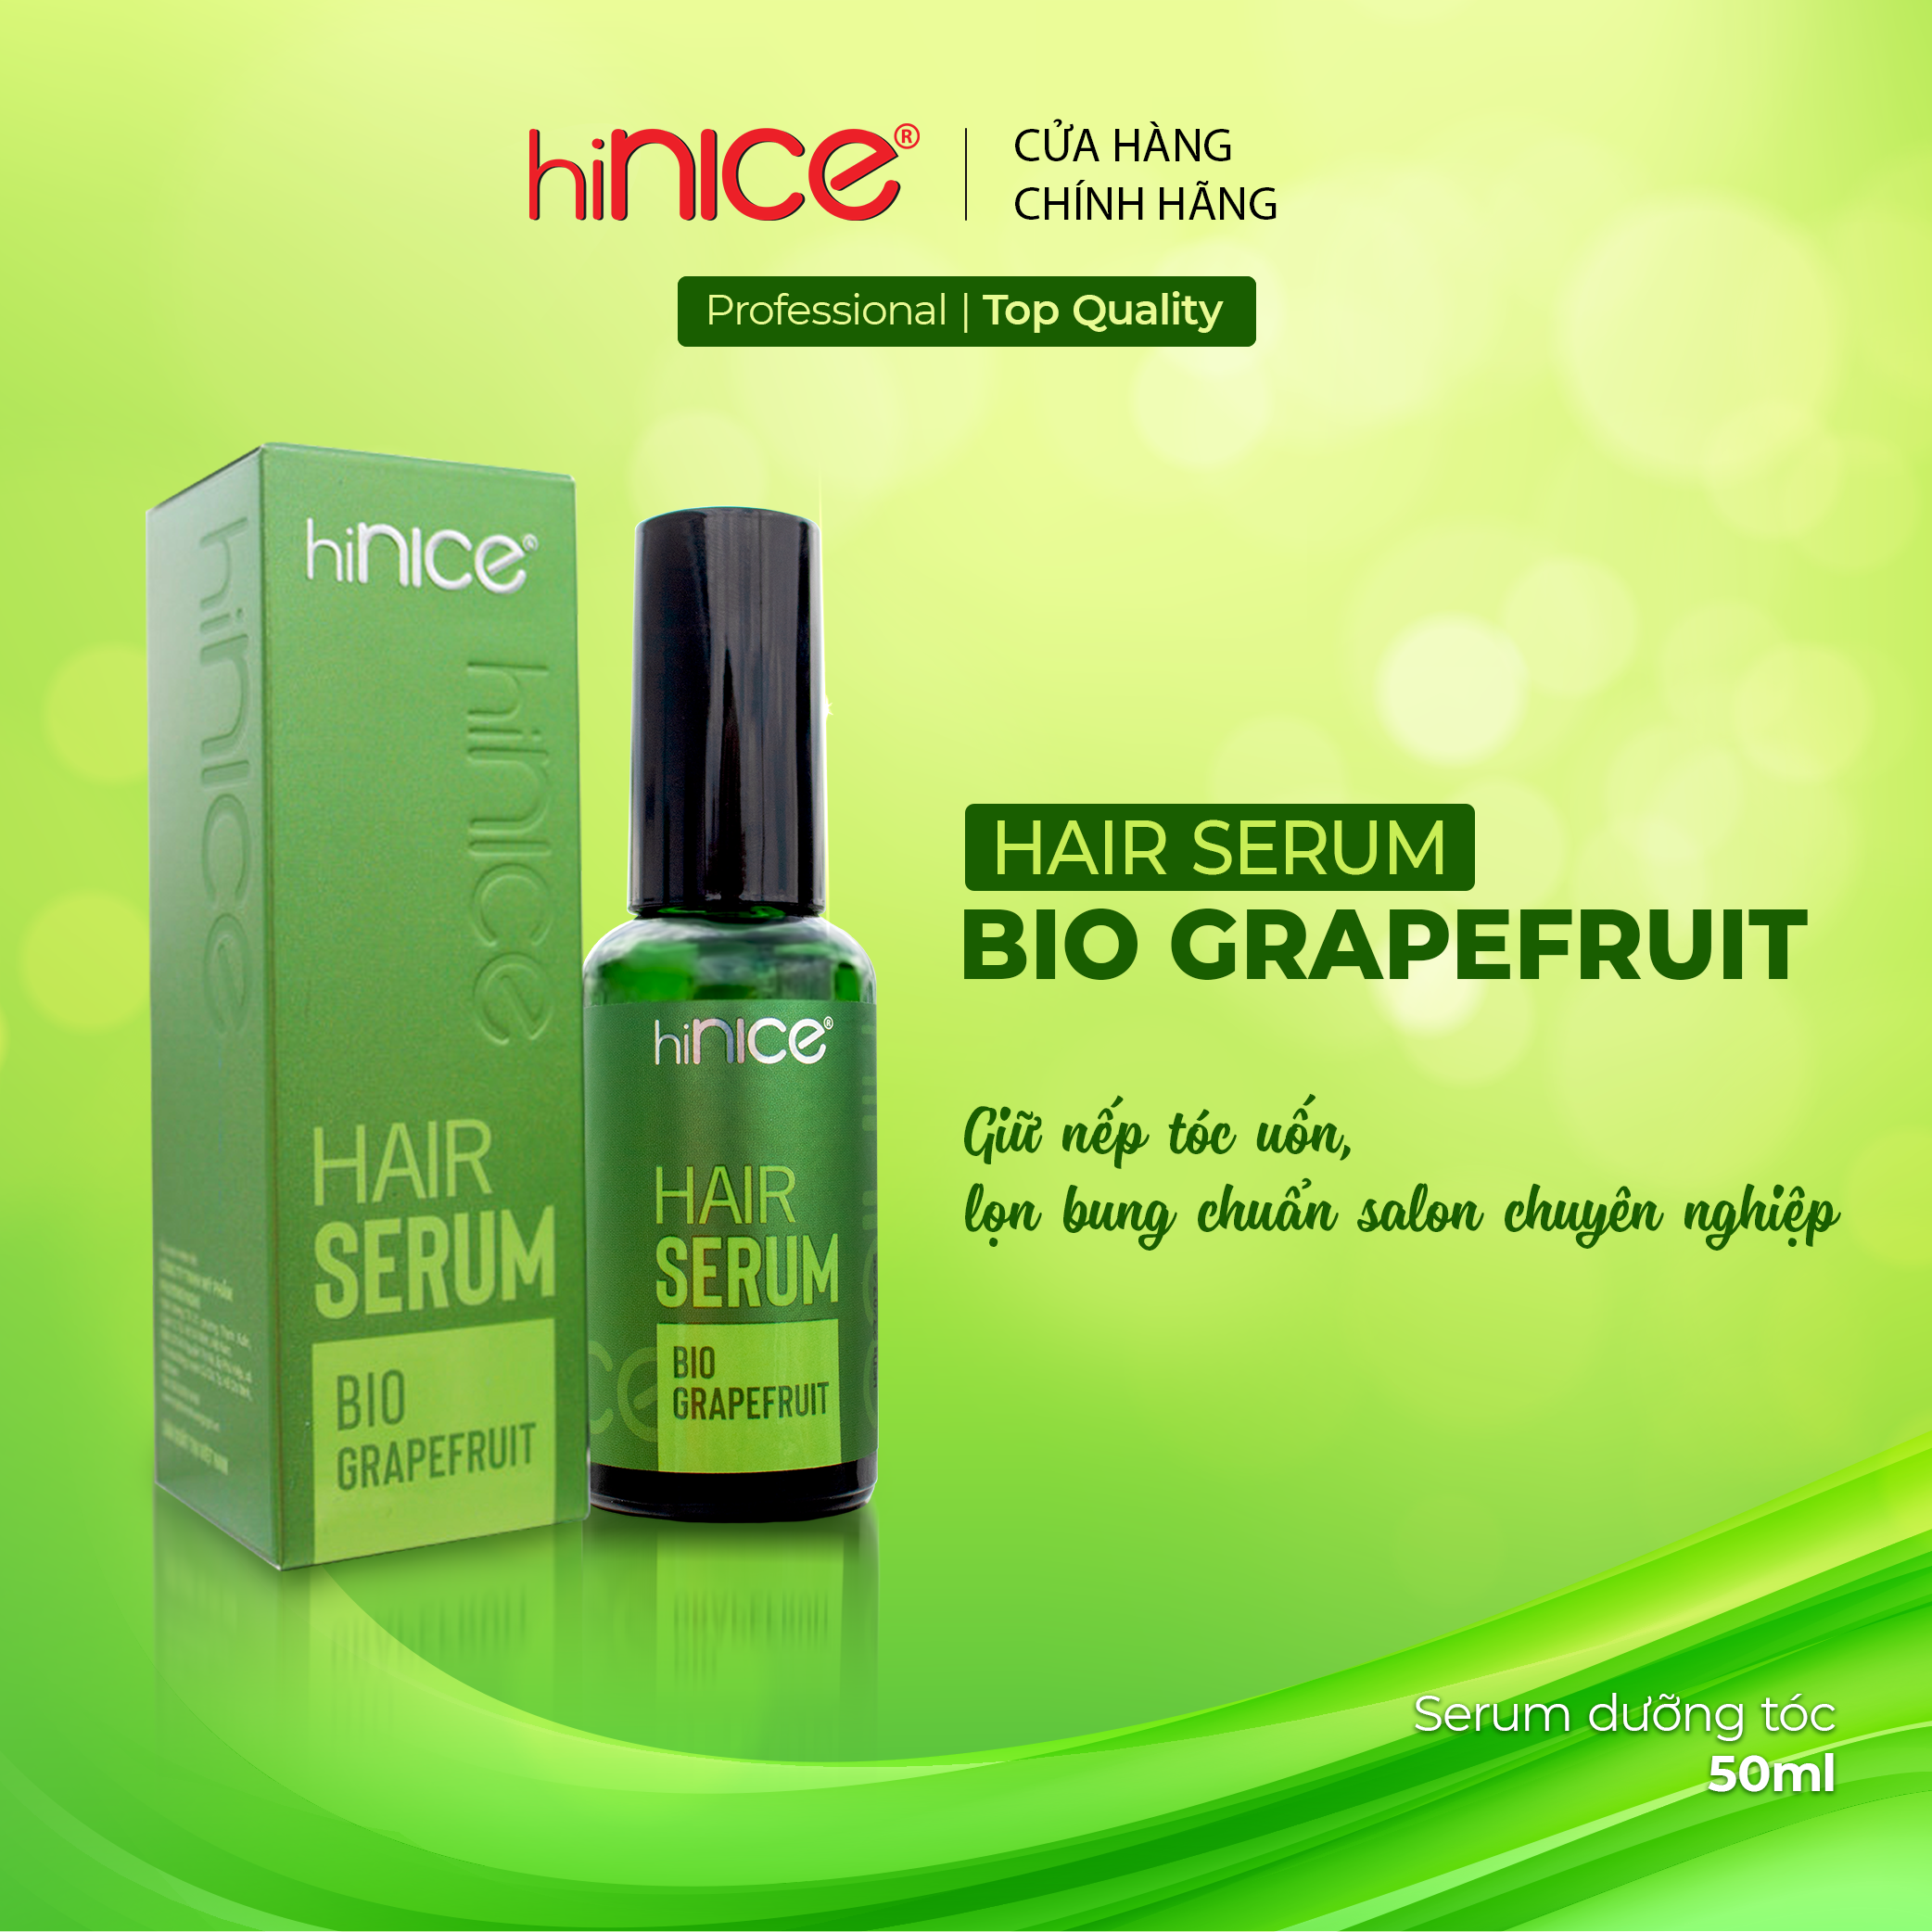 Serum dưỡng tóc hiNICE Bio Grapefuit giúp dưỡng ẩm, giữ nếp tóc uốn chuẩn Salon 50ml